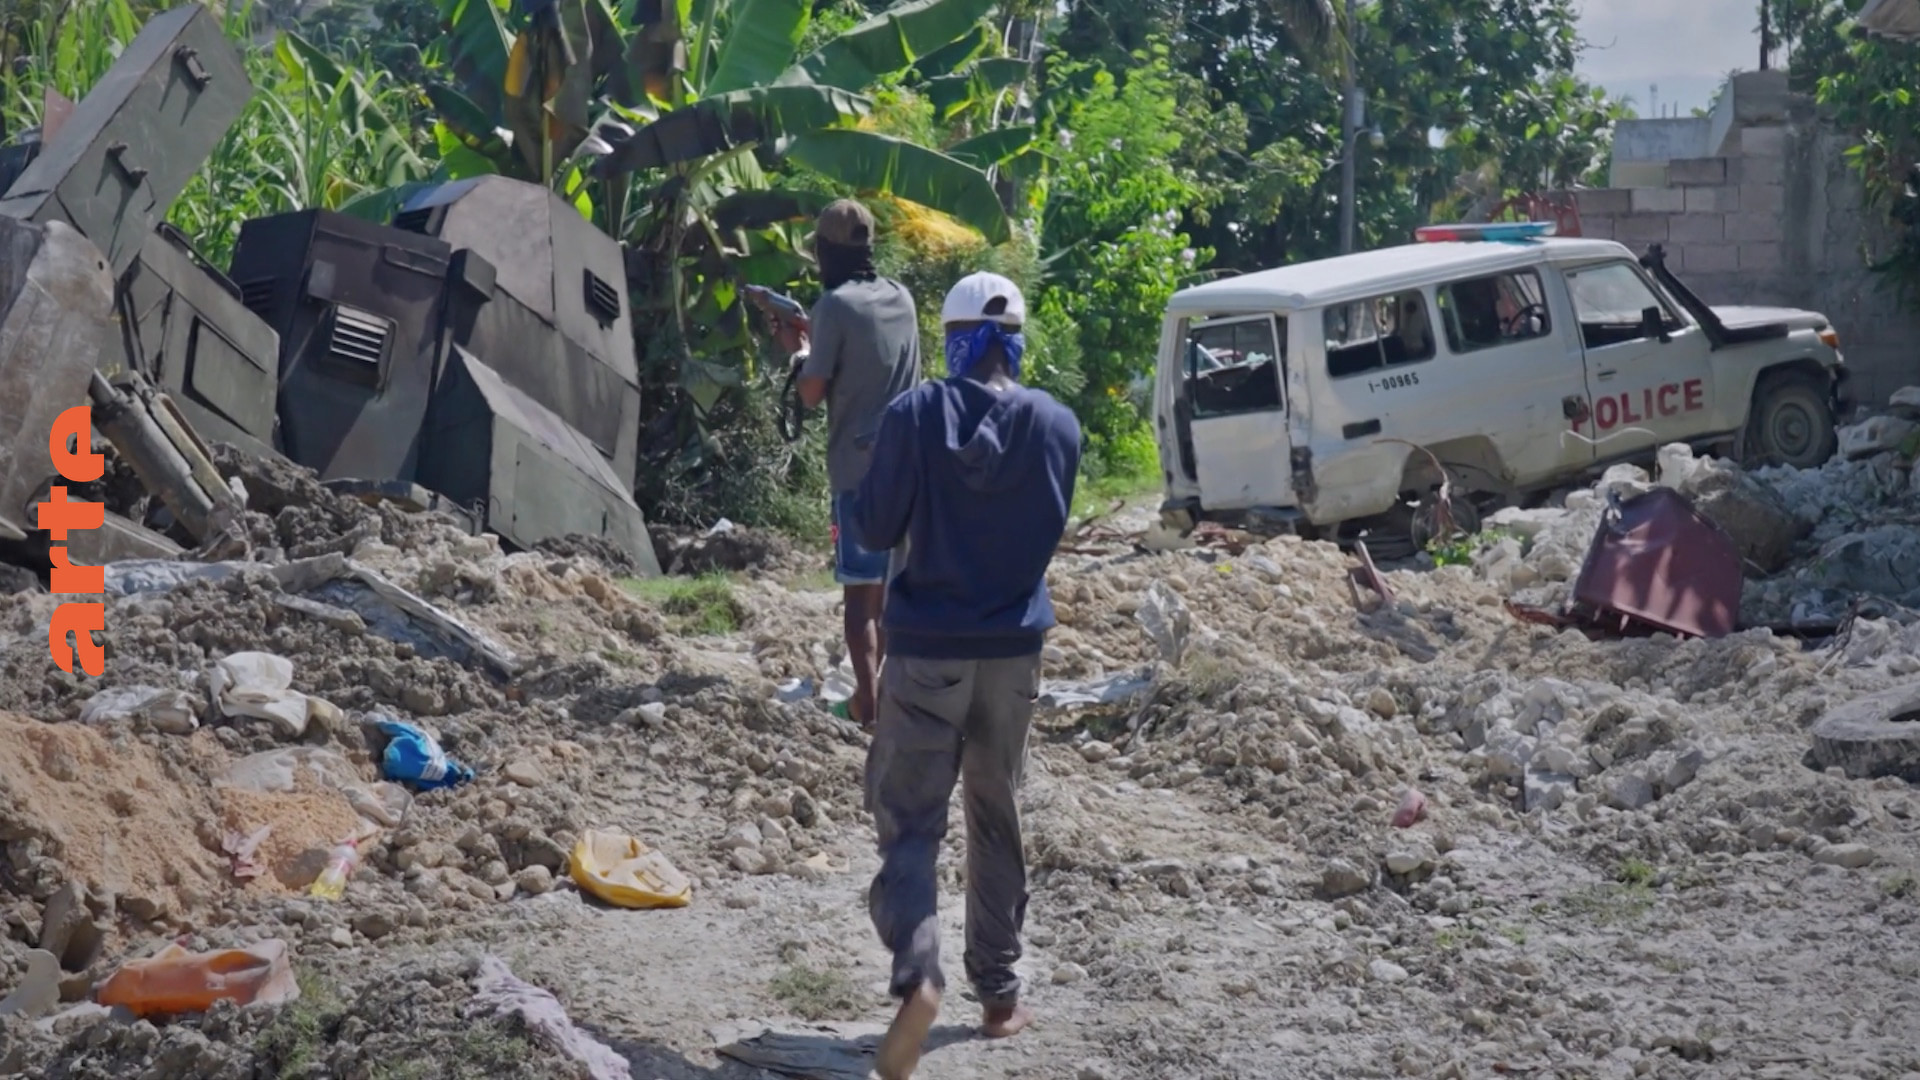 Haiti: Gangs erobern die Vorstädte